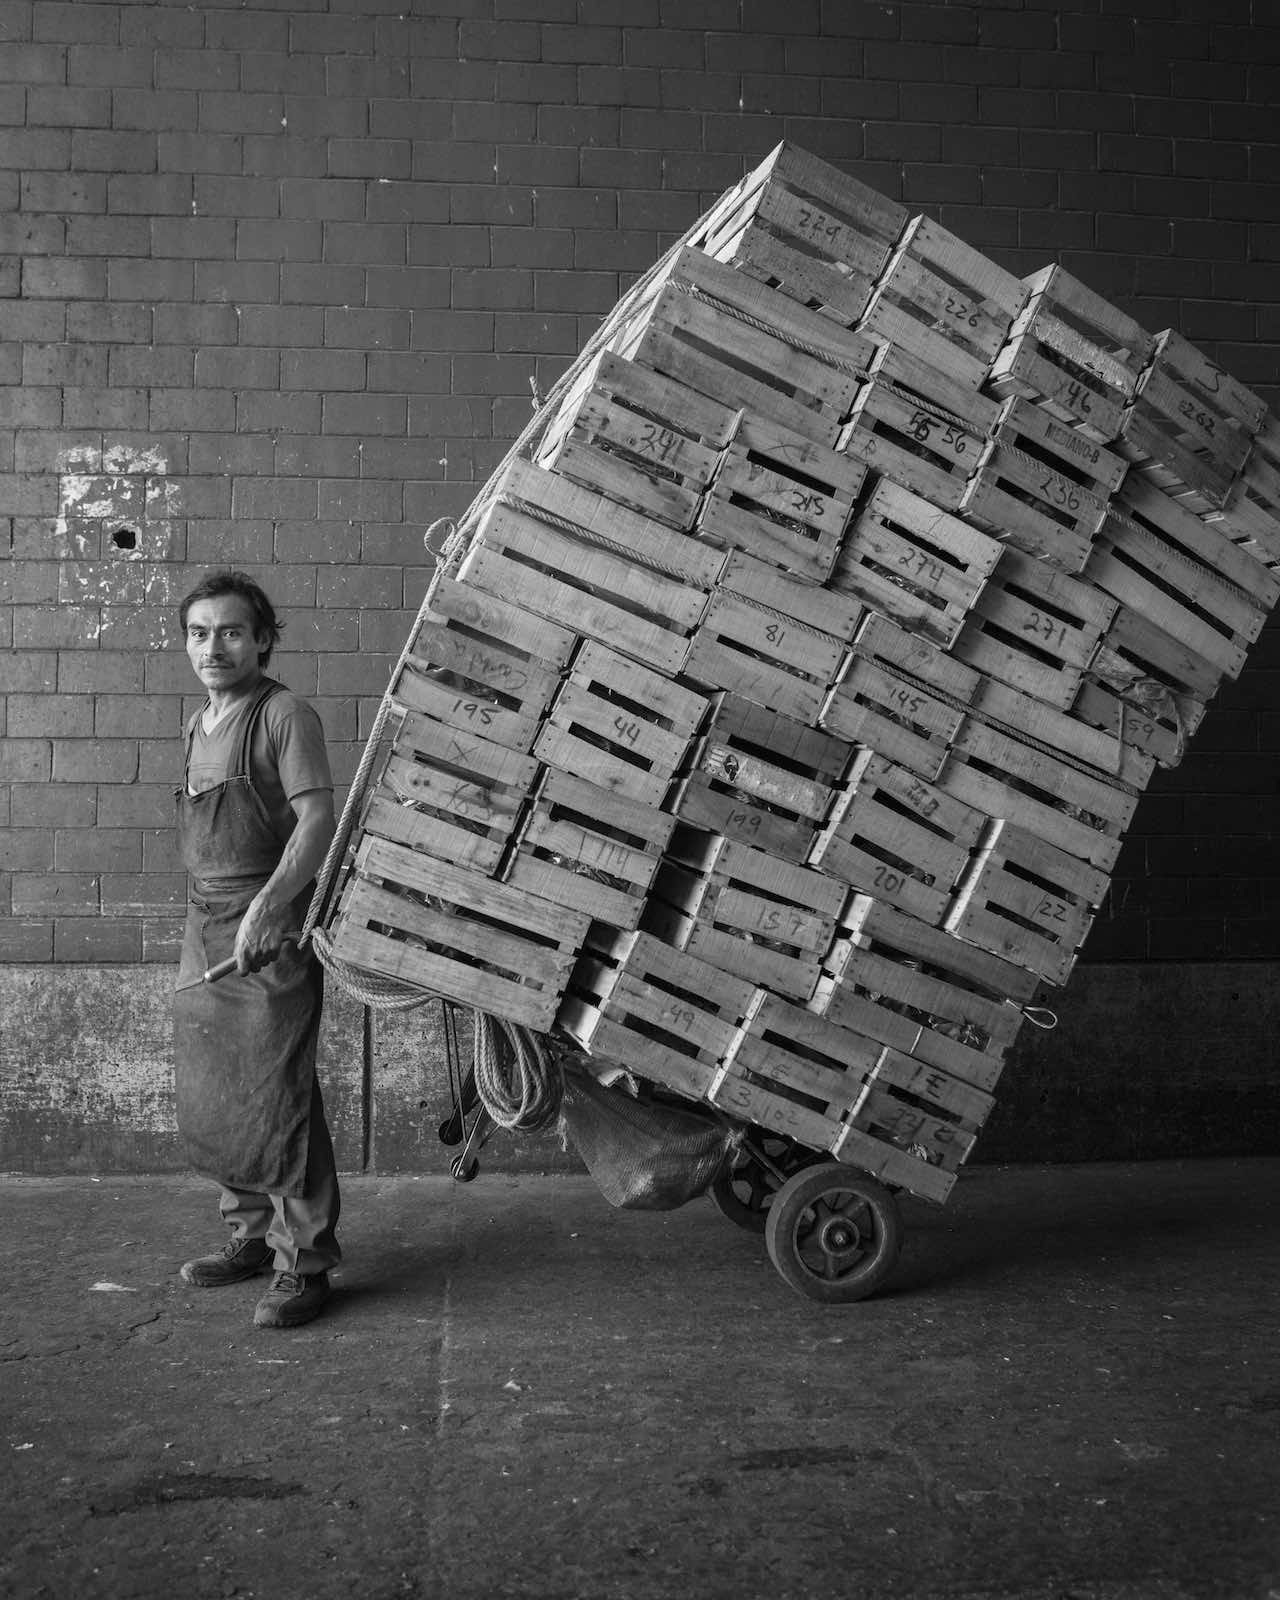 Jody Horton Photography - Vendor hauling crates of food through the open market, shot in B&W. 